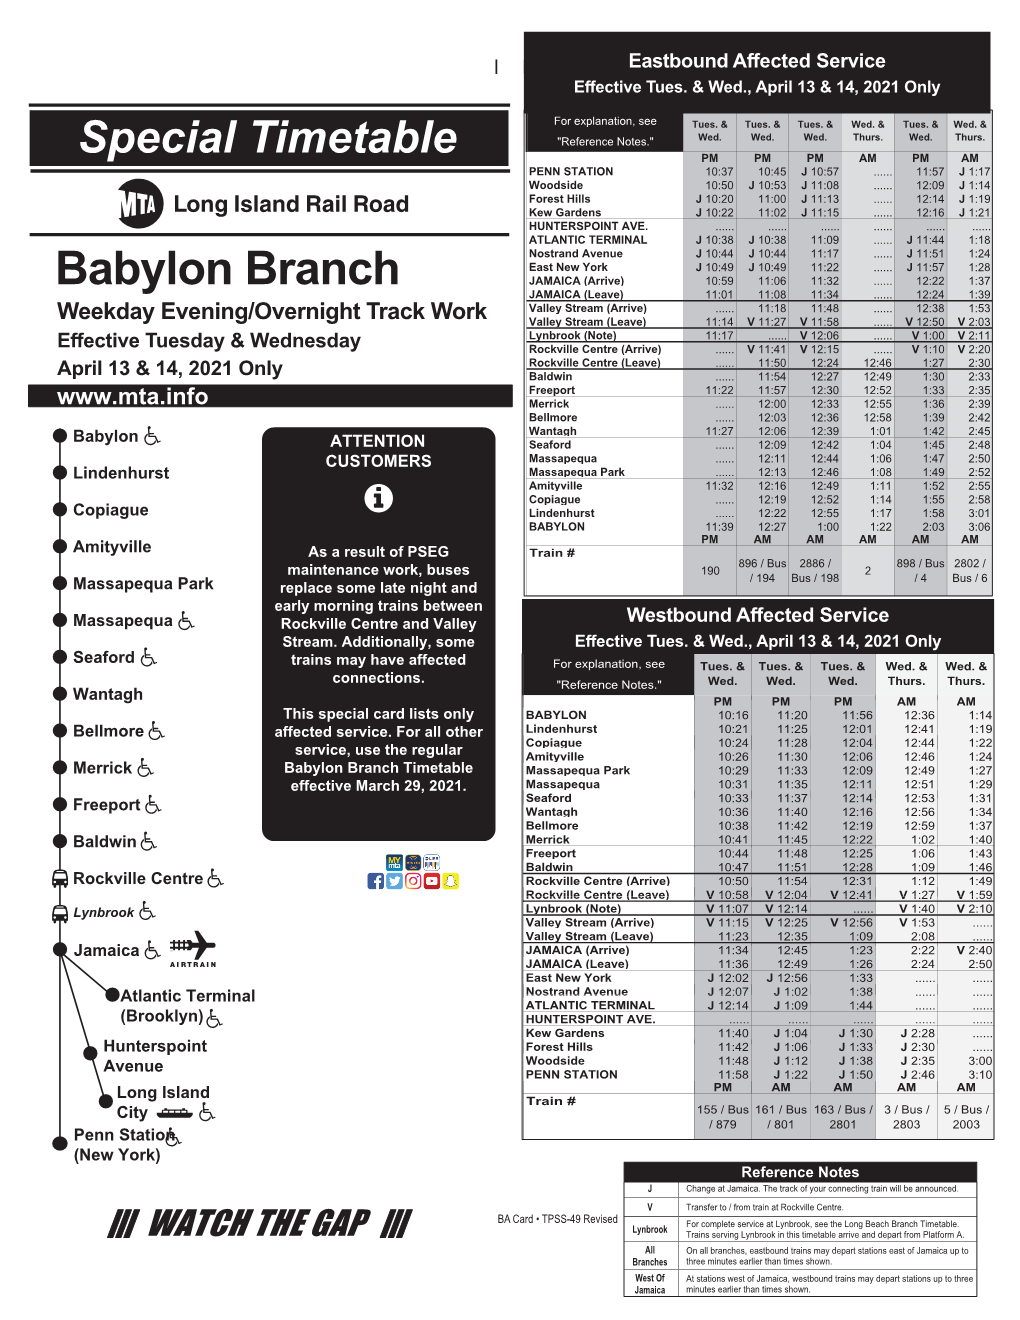 Babylon Branch JAMAICA (Arrive) 10:59 11:06 11:32